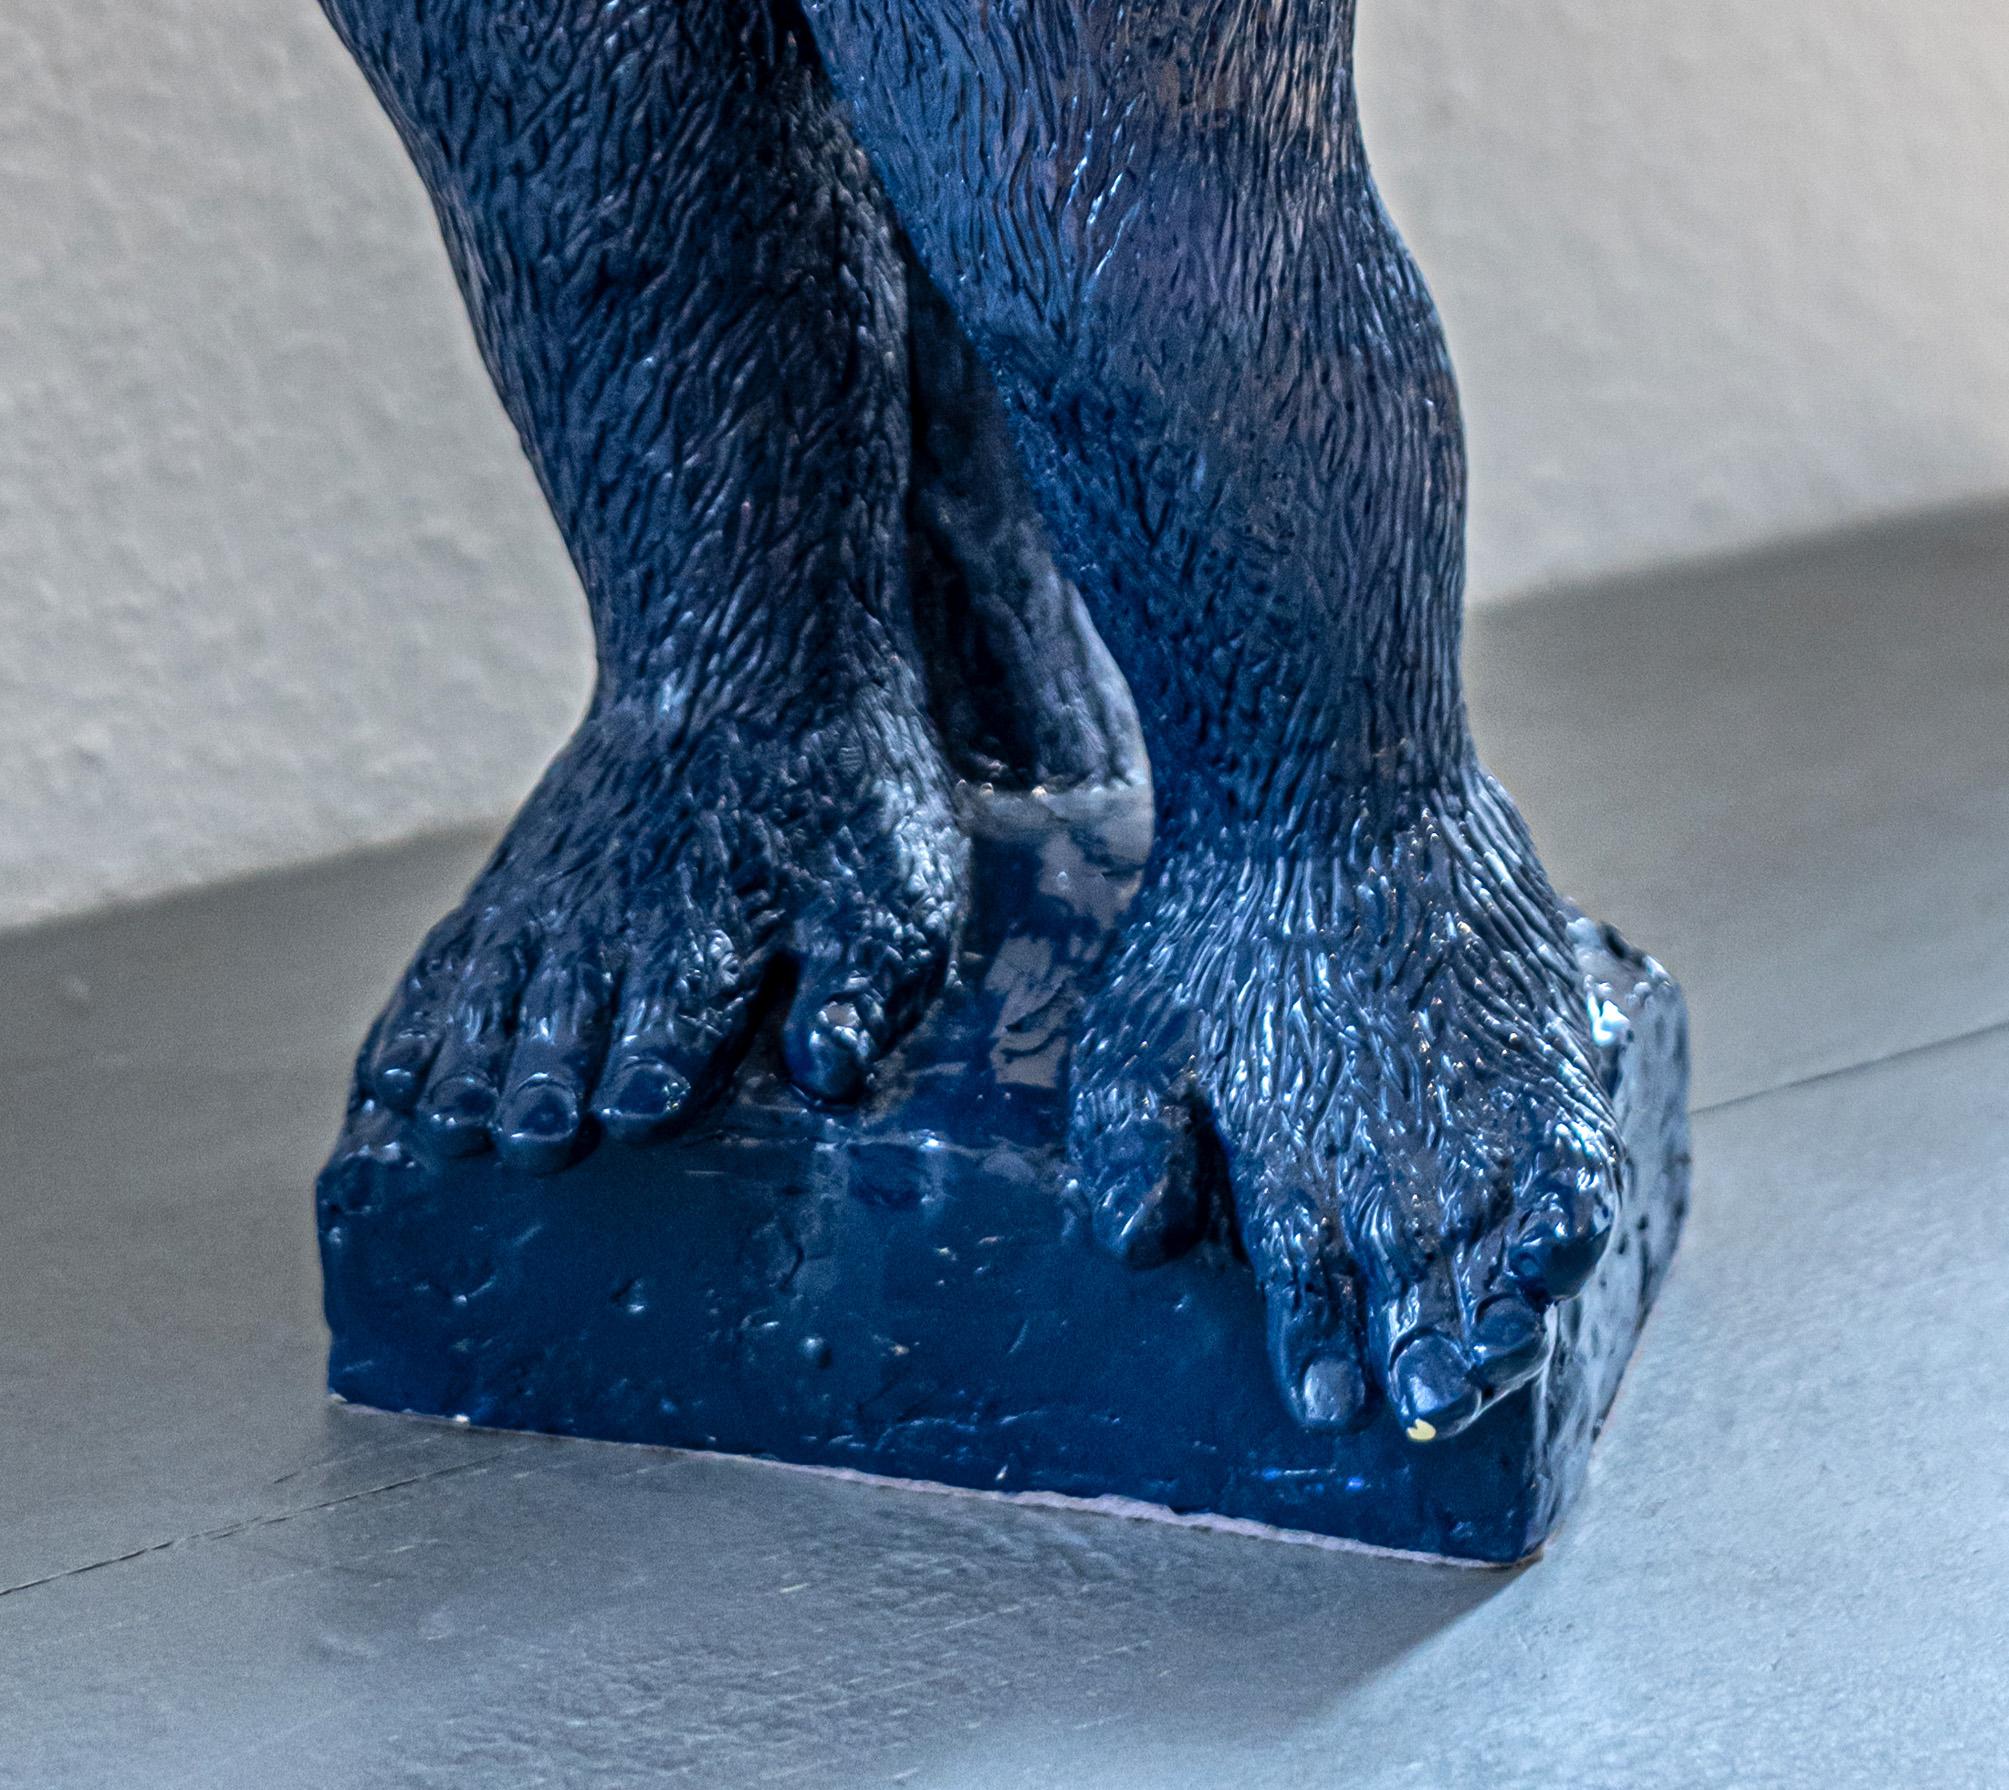 Soon ! Dark Blue Gorilla Sculpture in the posture of the 